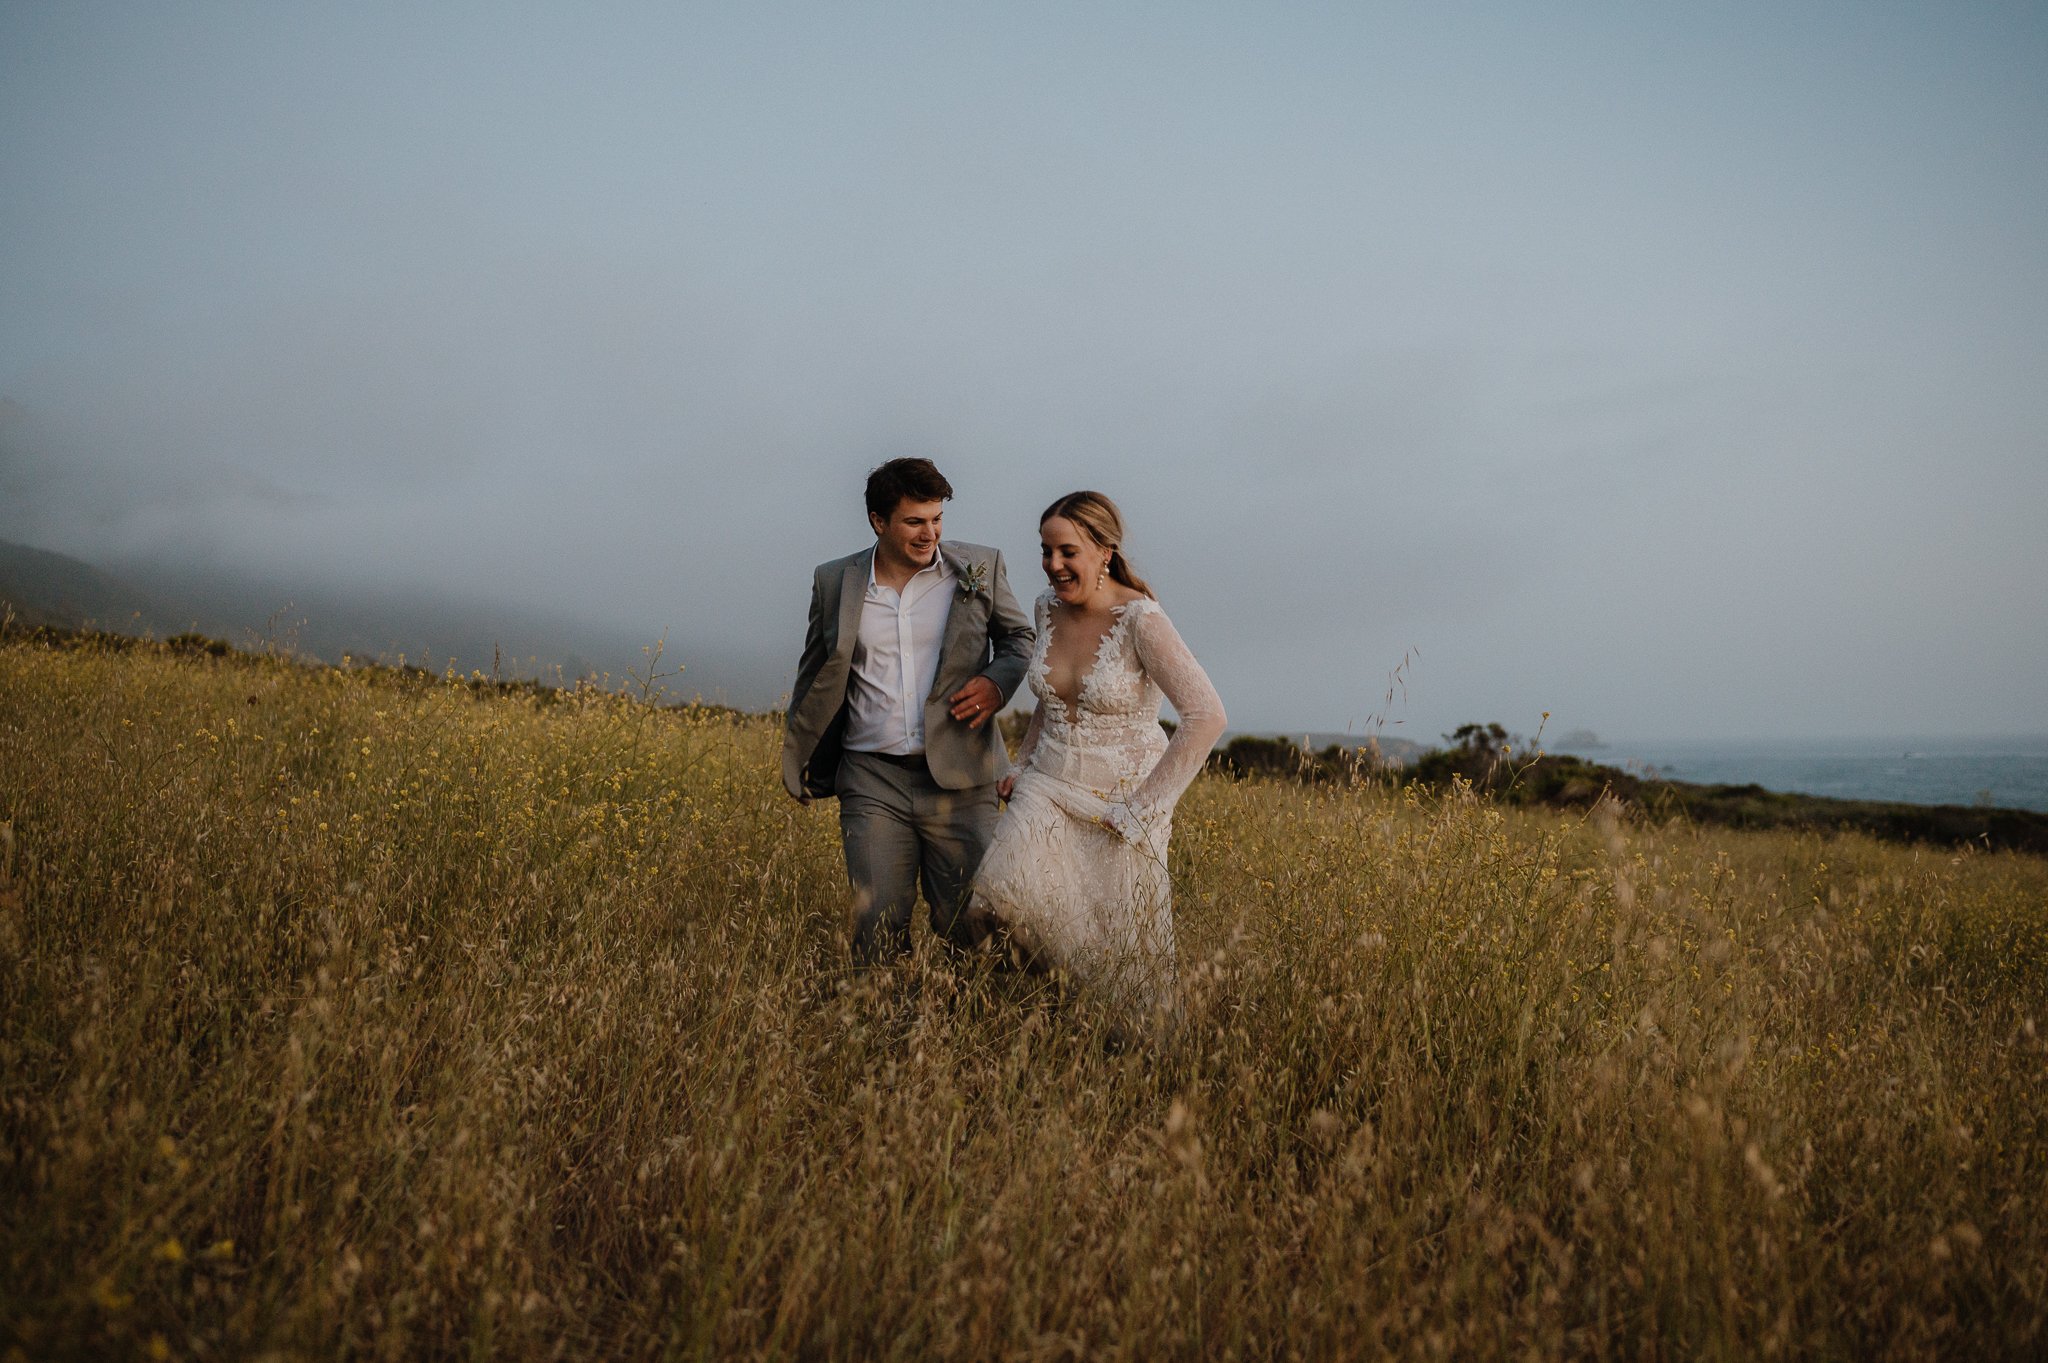 Big Sur Ventana wedding bride and groom running through grassy area smiling 